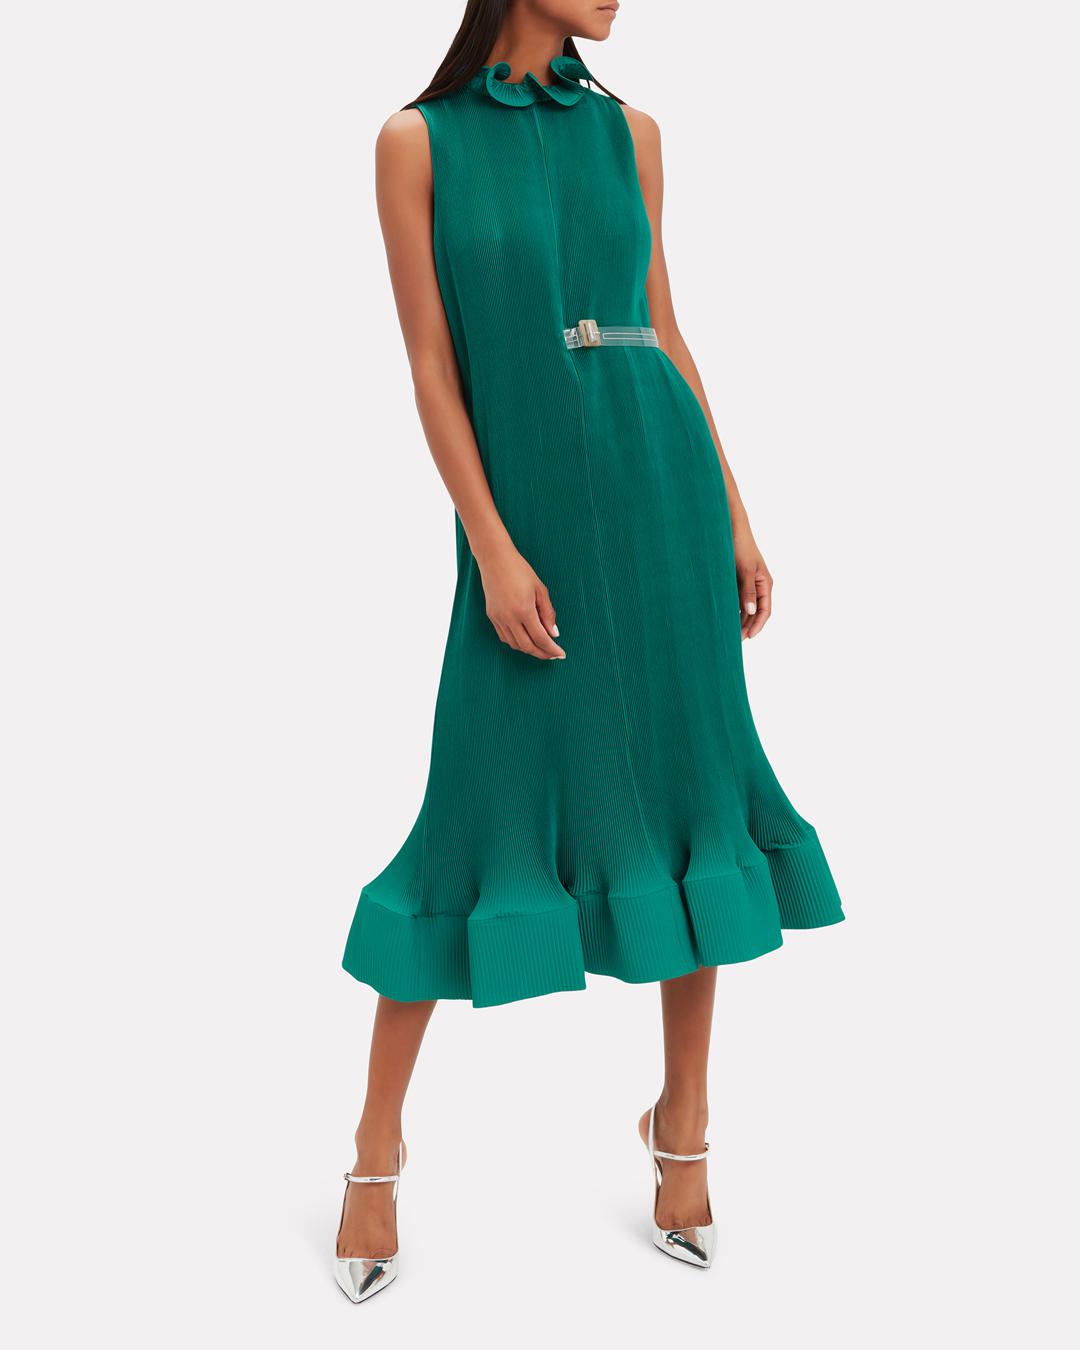 tibi green dress